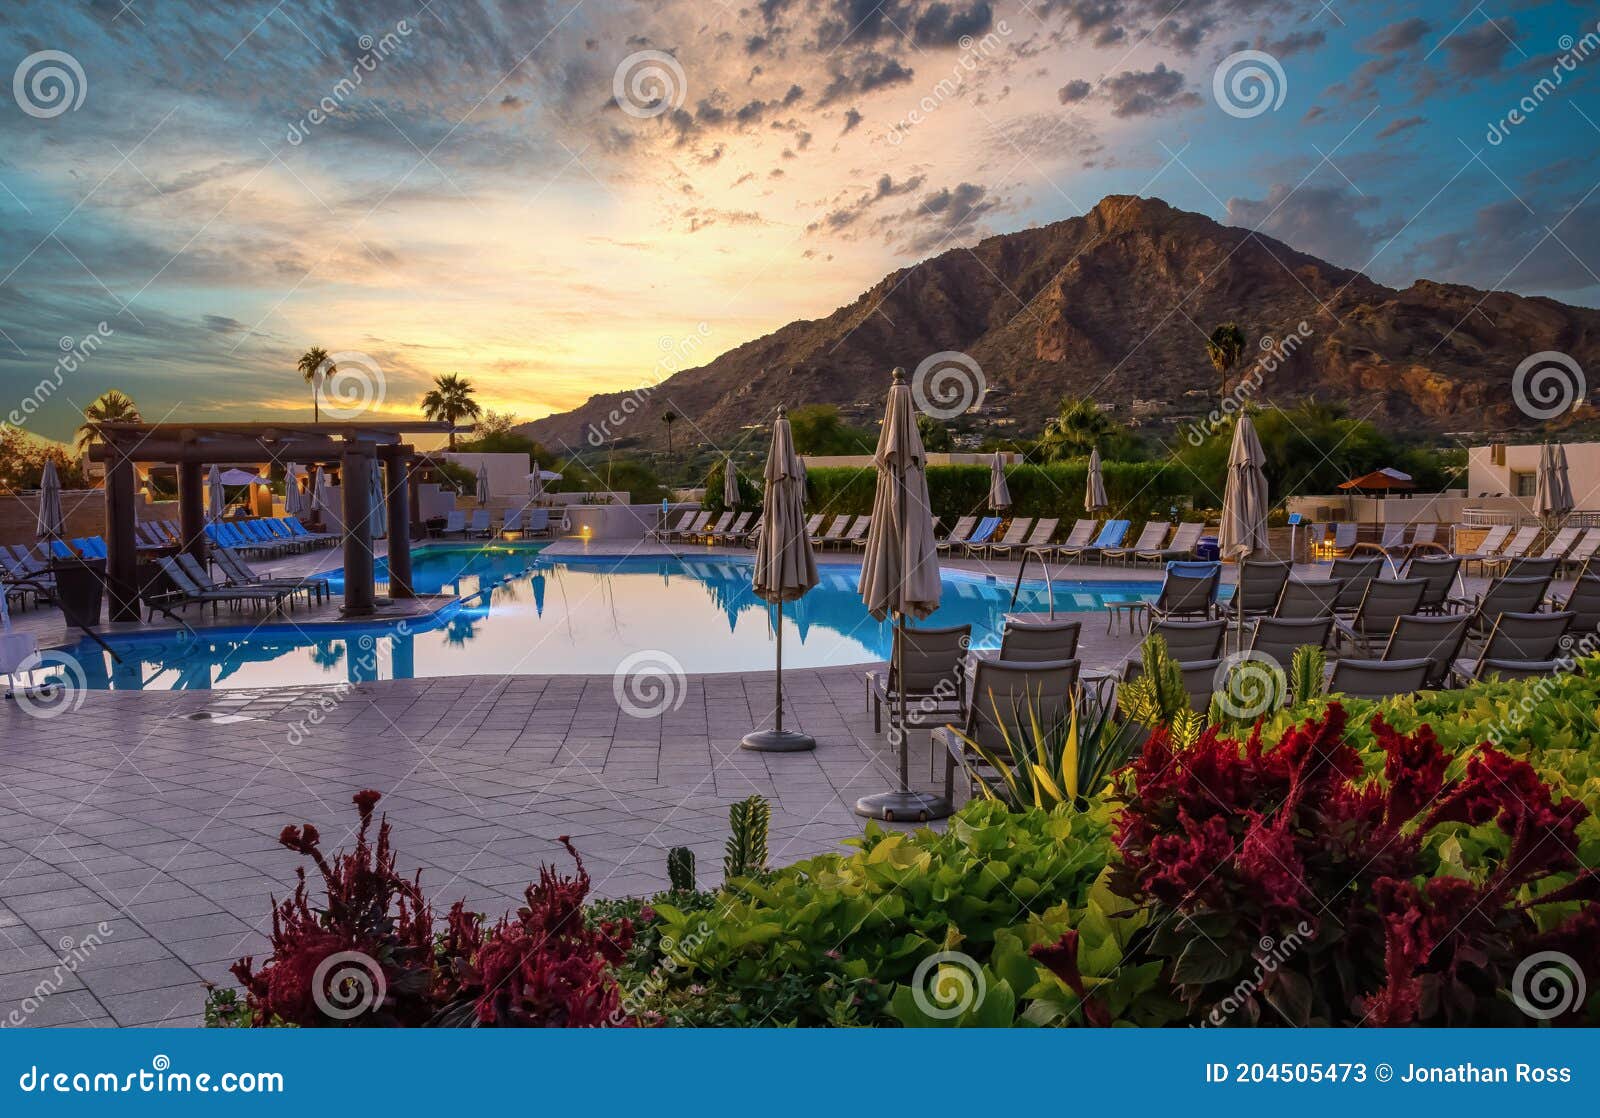 arizona resort with pool and mountain